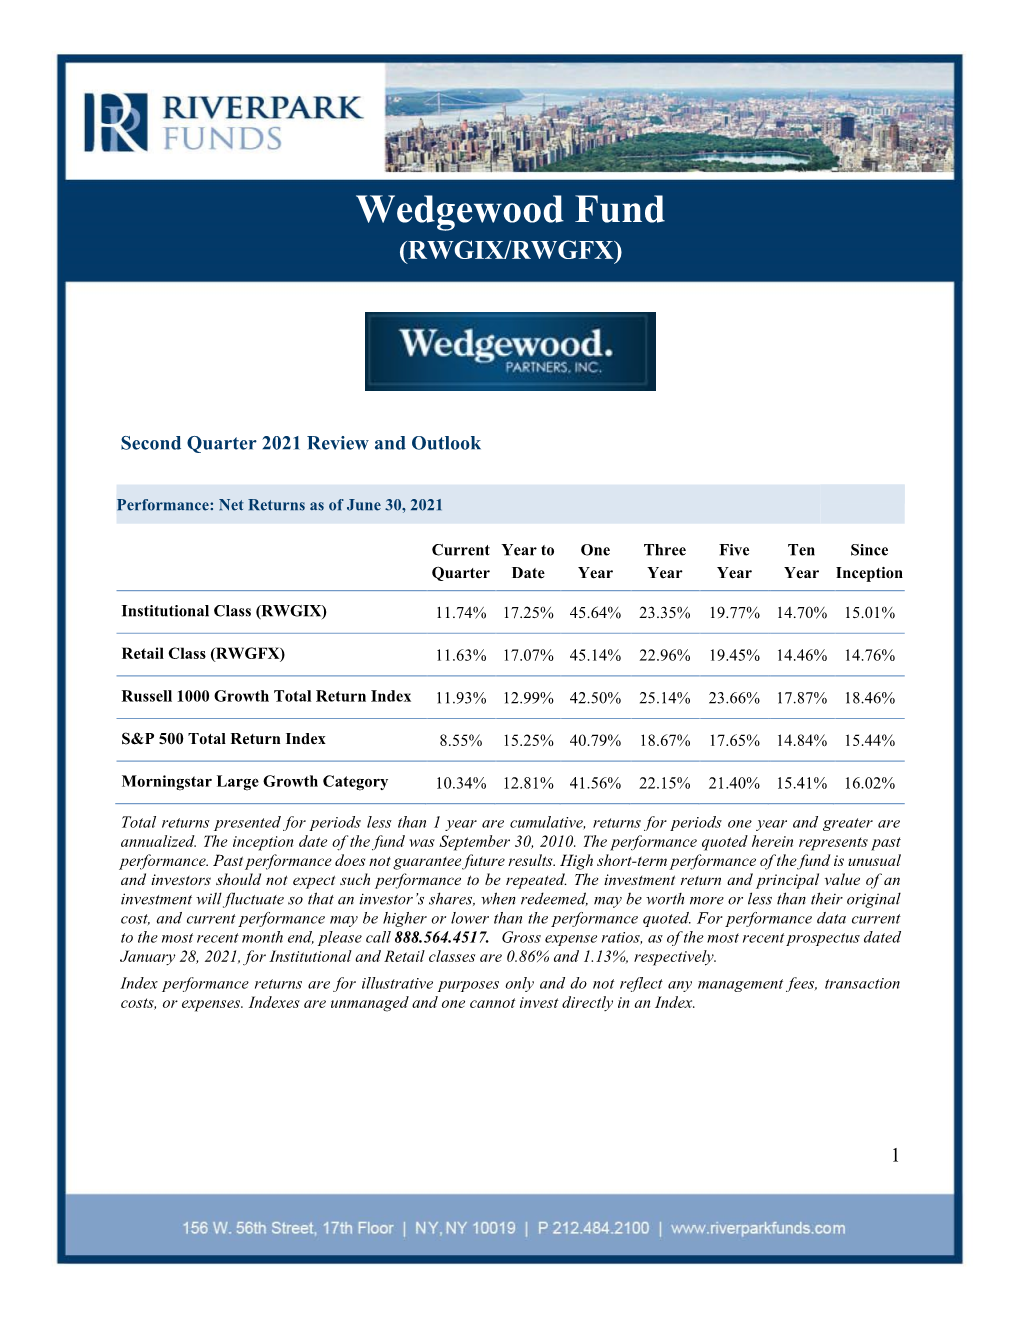 Wedgewood Fund (RWGIX/RWGFX)